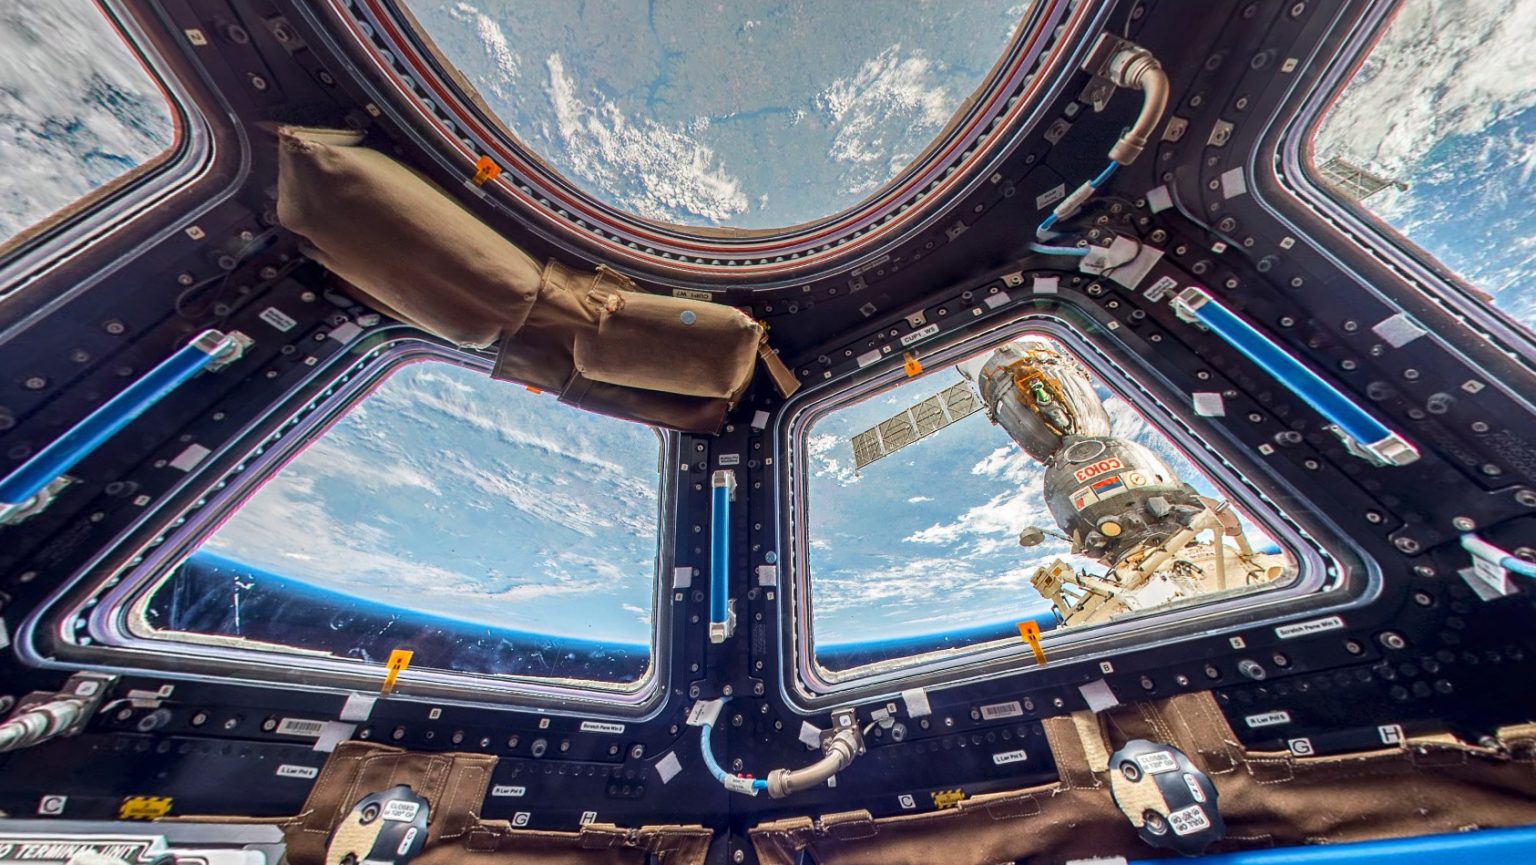 Urobte si výlet na ISS vďaka Google a jeho programu Arts & Culture